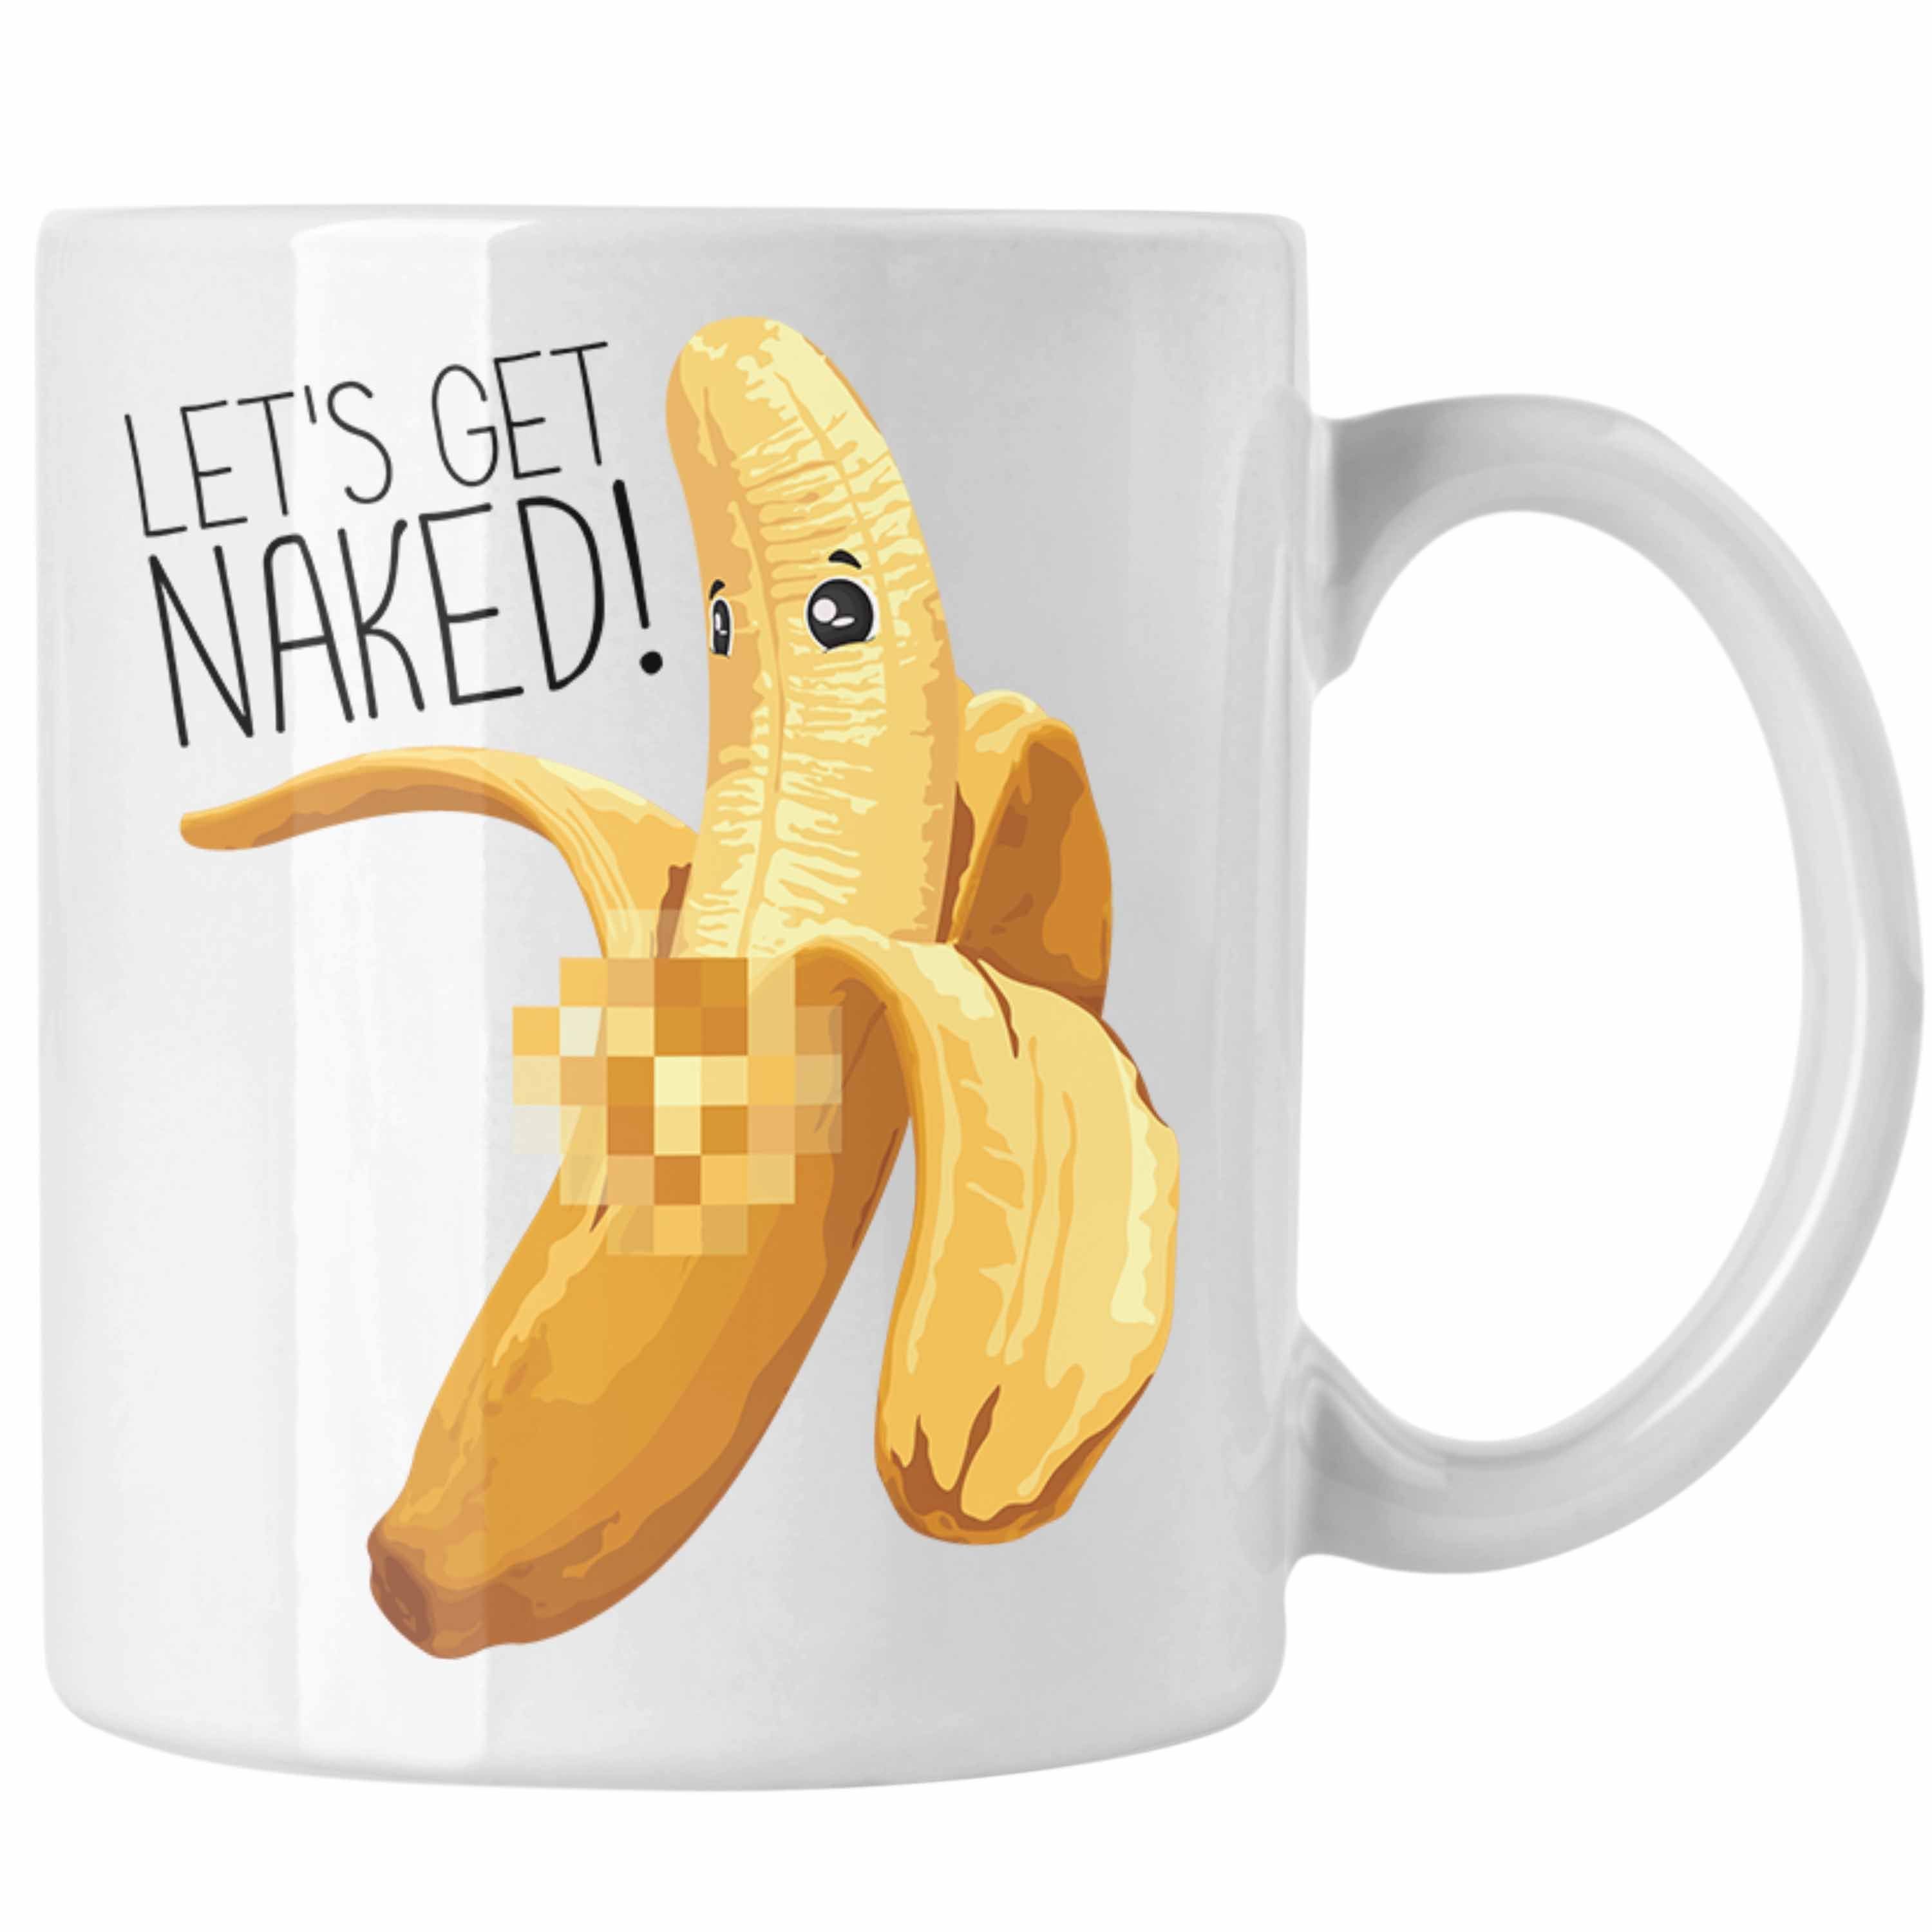 Trendation Tasse Banane Lets Get Naked Tasse Geschenk Striptease Erwachsener Humor Bech Weiss